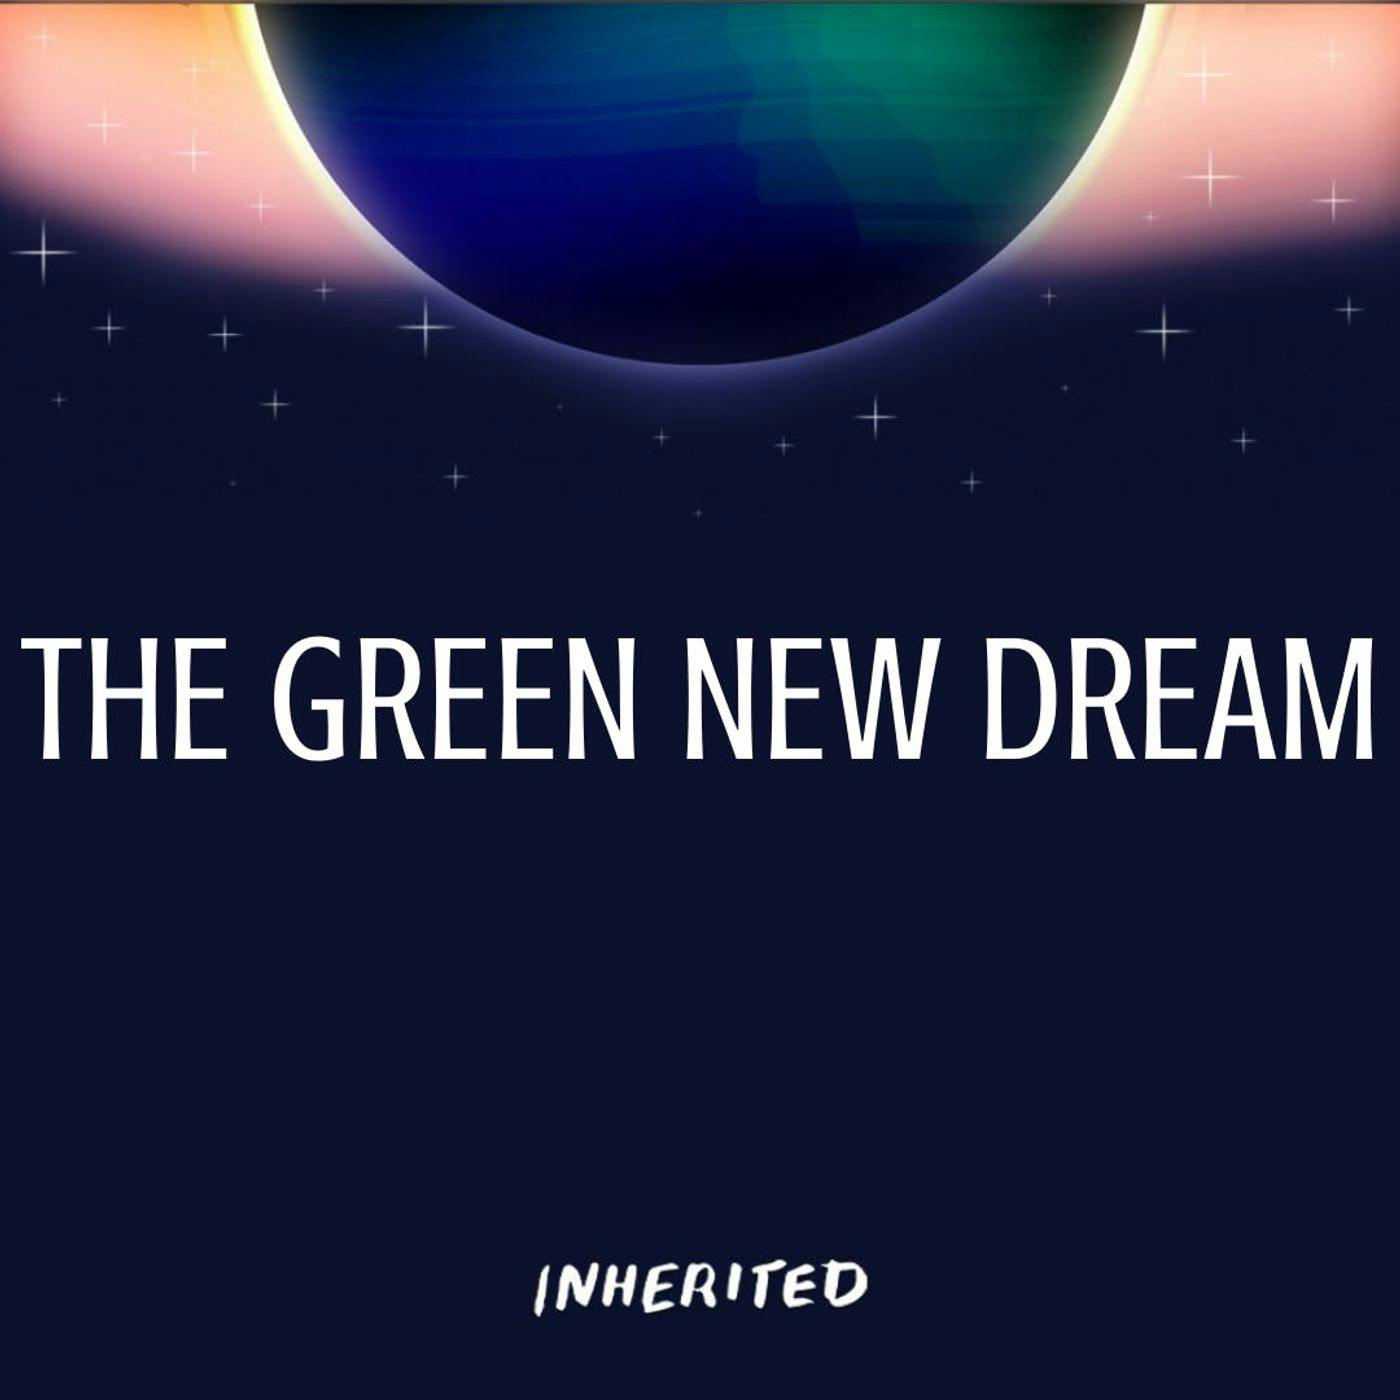 The Green New Dream